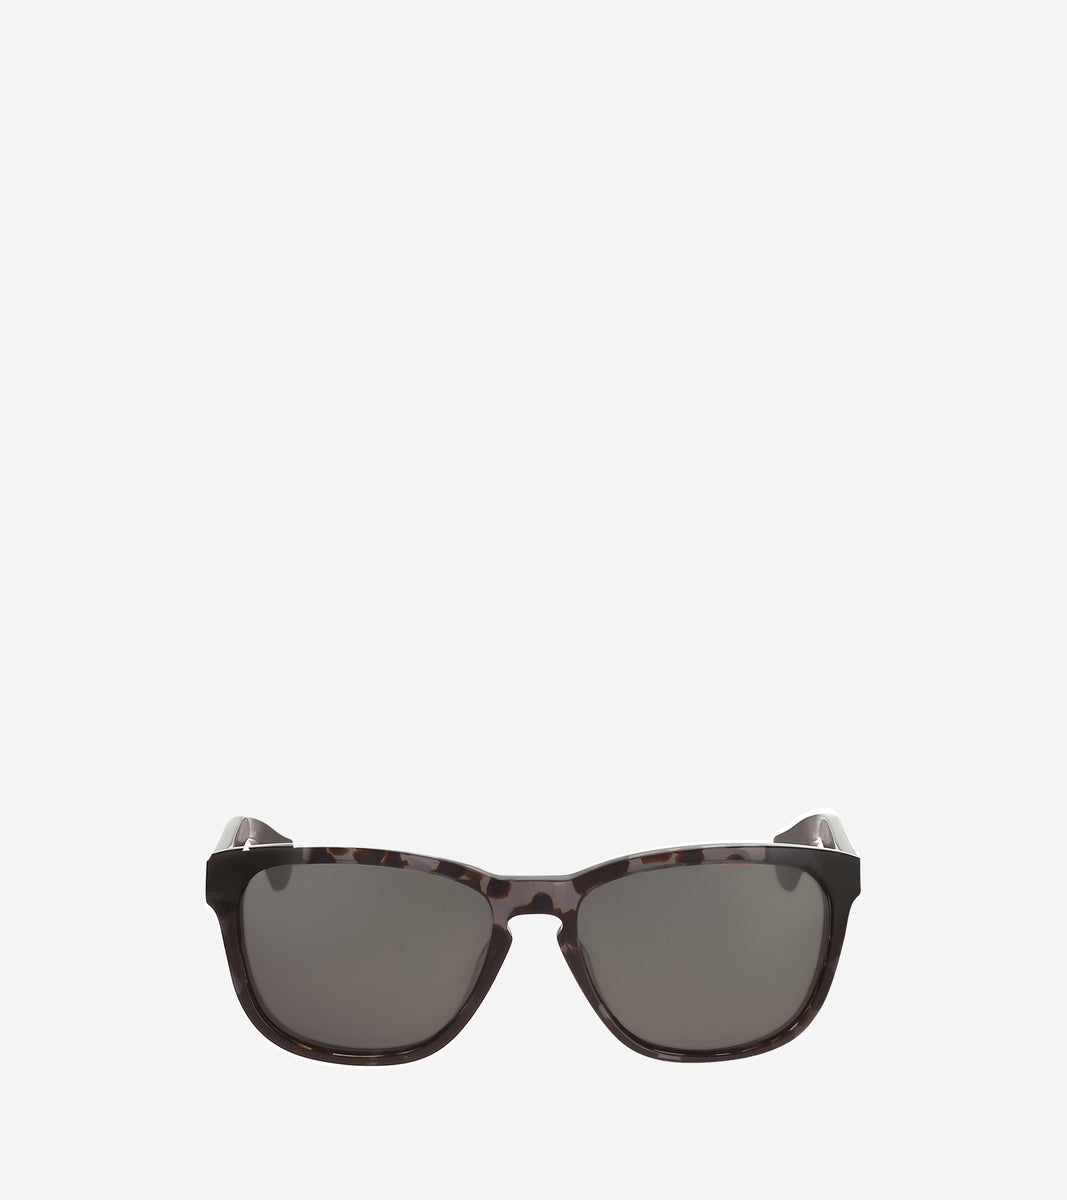 ColeHaan-Oversized Sunglasses-sg1018-Black Tortoise